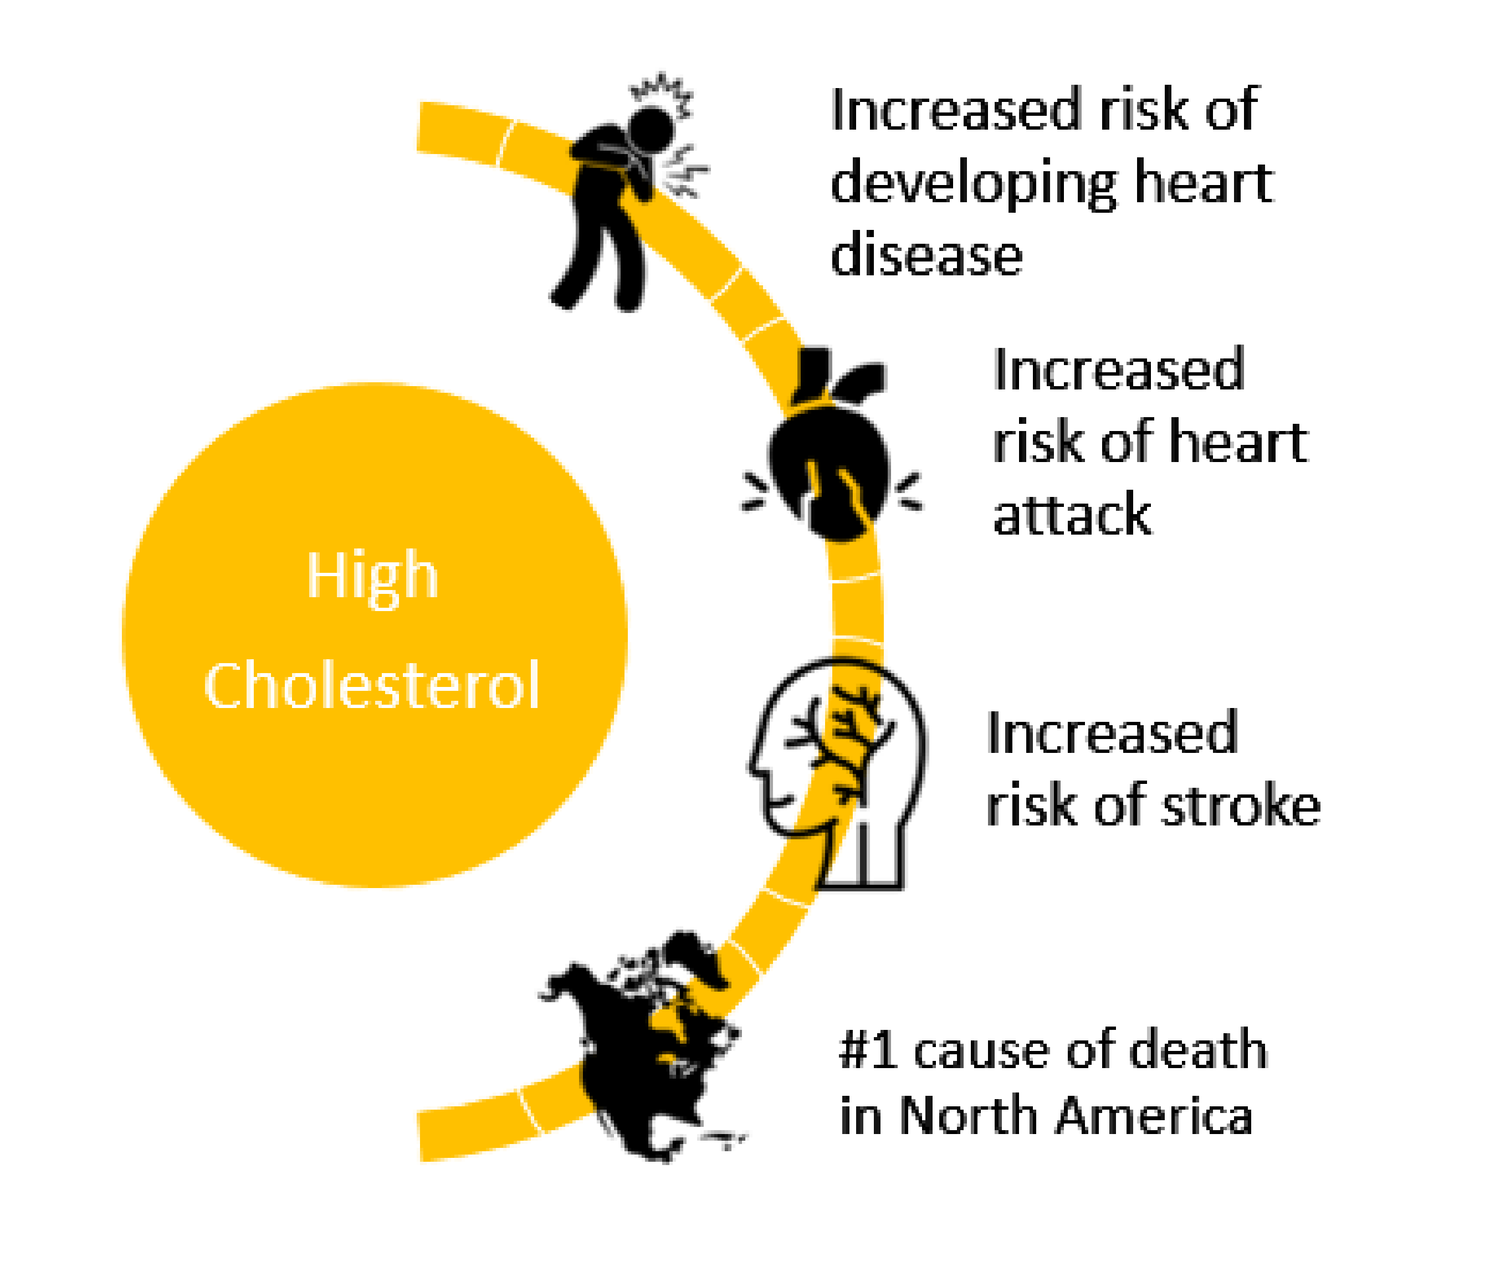 risk factors of having high cholesterol